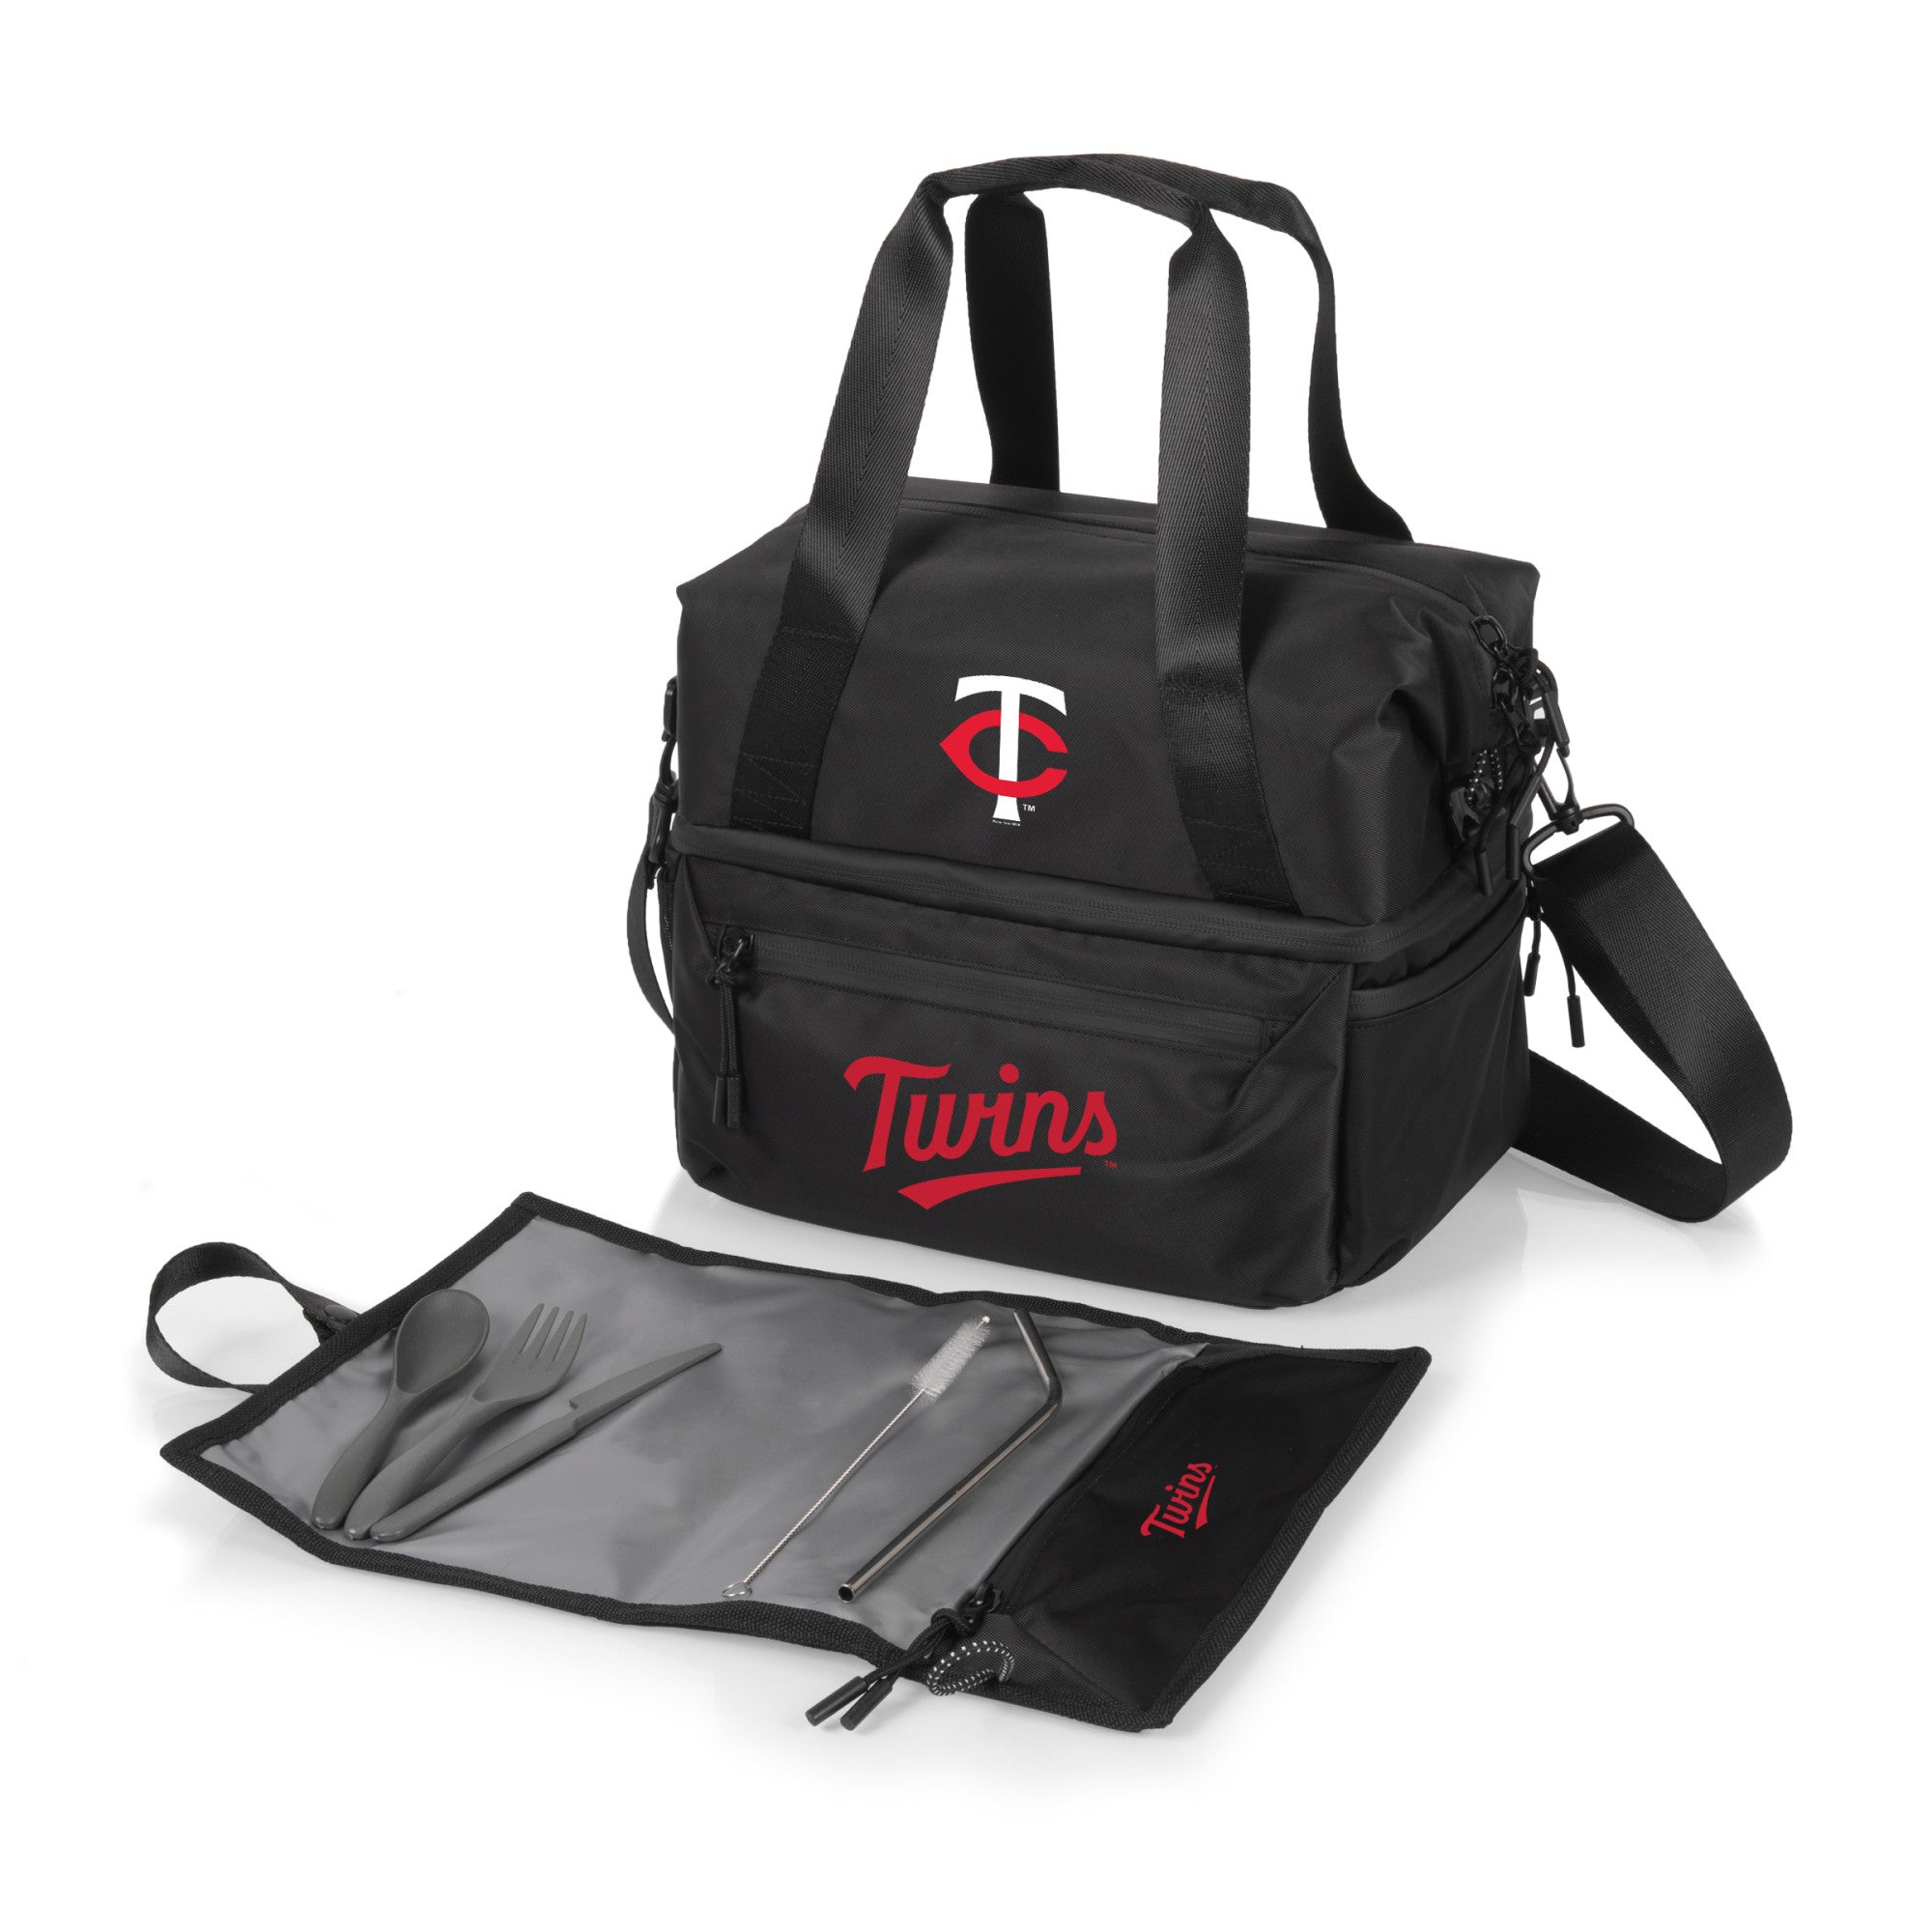 Minnesota Twins - Tarana Lunch Bag Cooler with Utensils